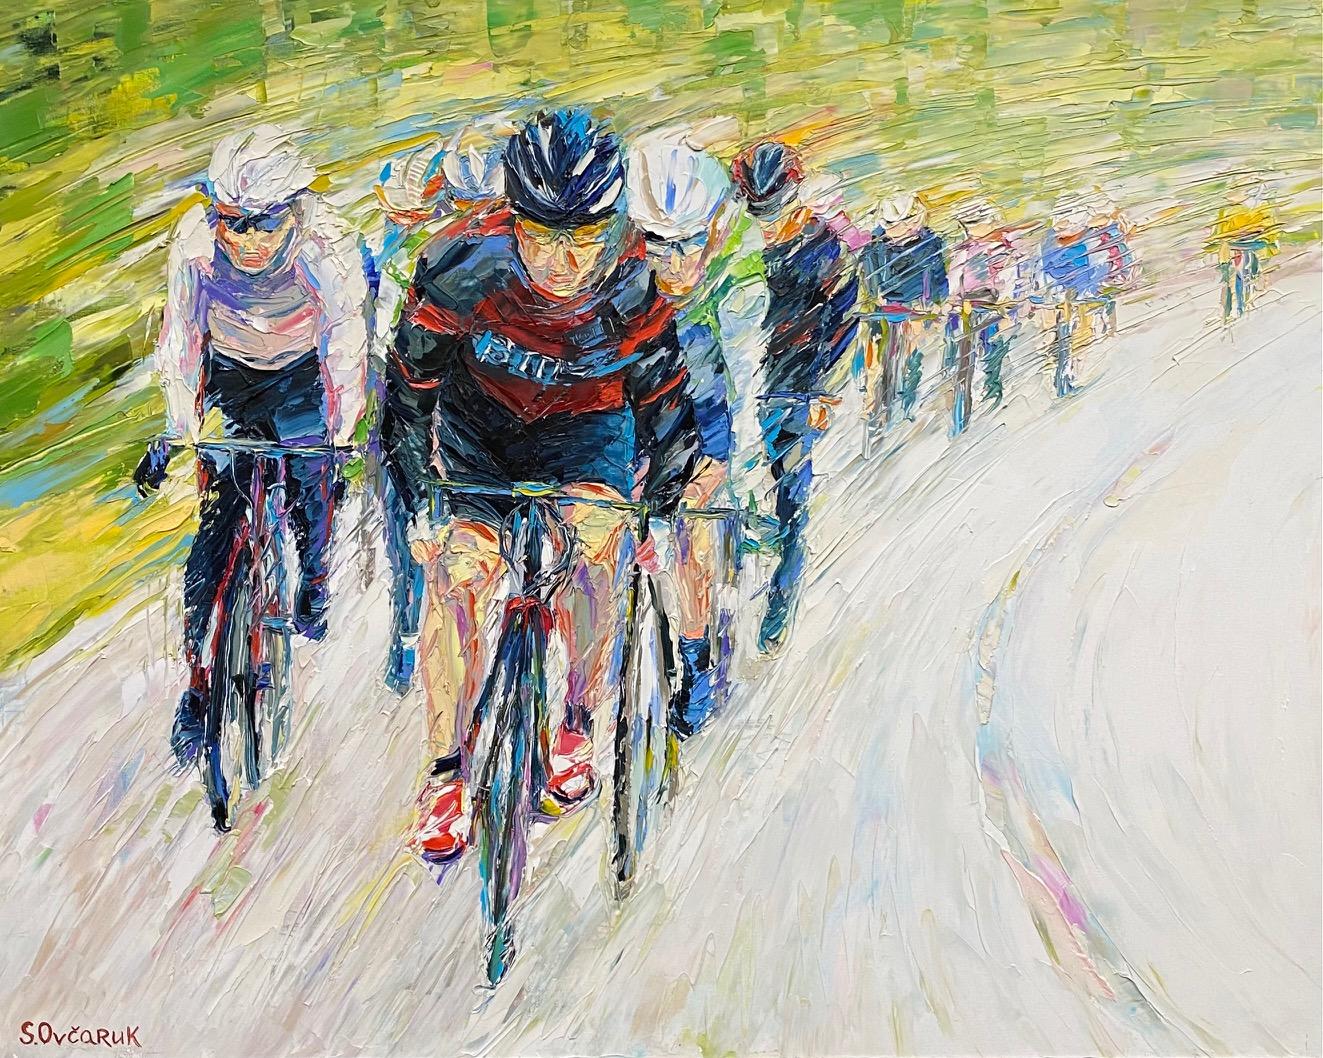 Tour de France, original 31x40 expressionist figurative landscape - Painting by Serge Ovcaruk